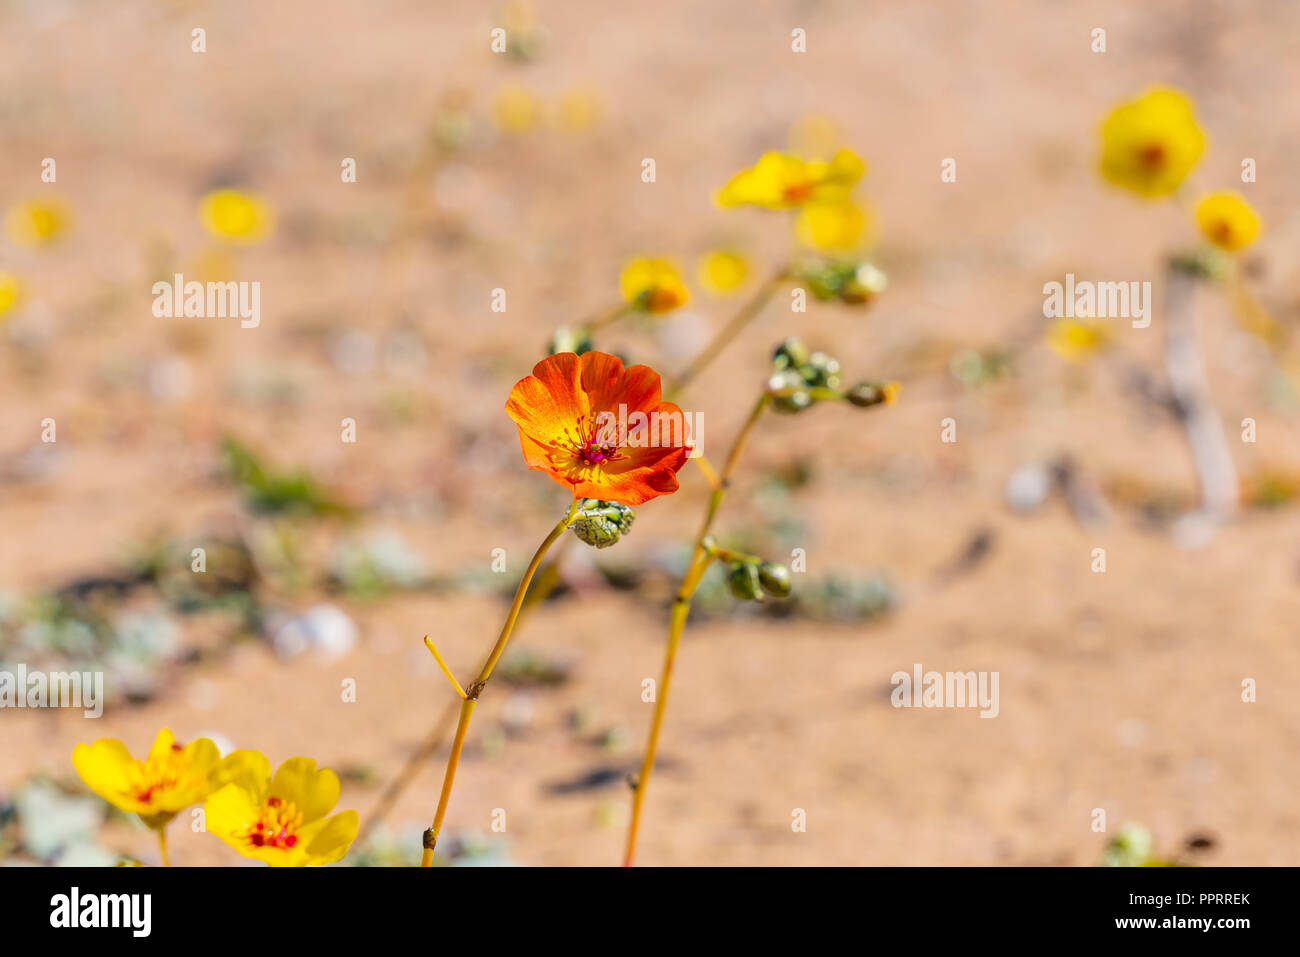 Cistanthe longiscapa, better known as pata guanaco. Flower that grows in the Atacama Desert in the spring season thanks to the child's phenomenon Stock Photo